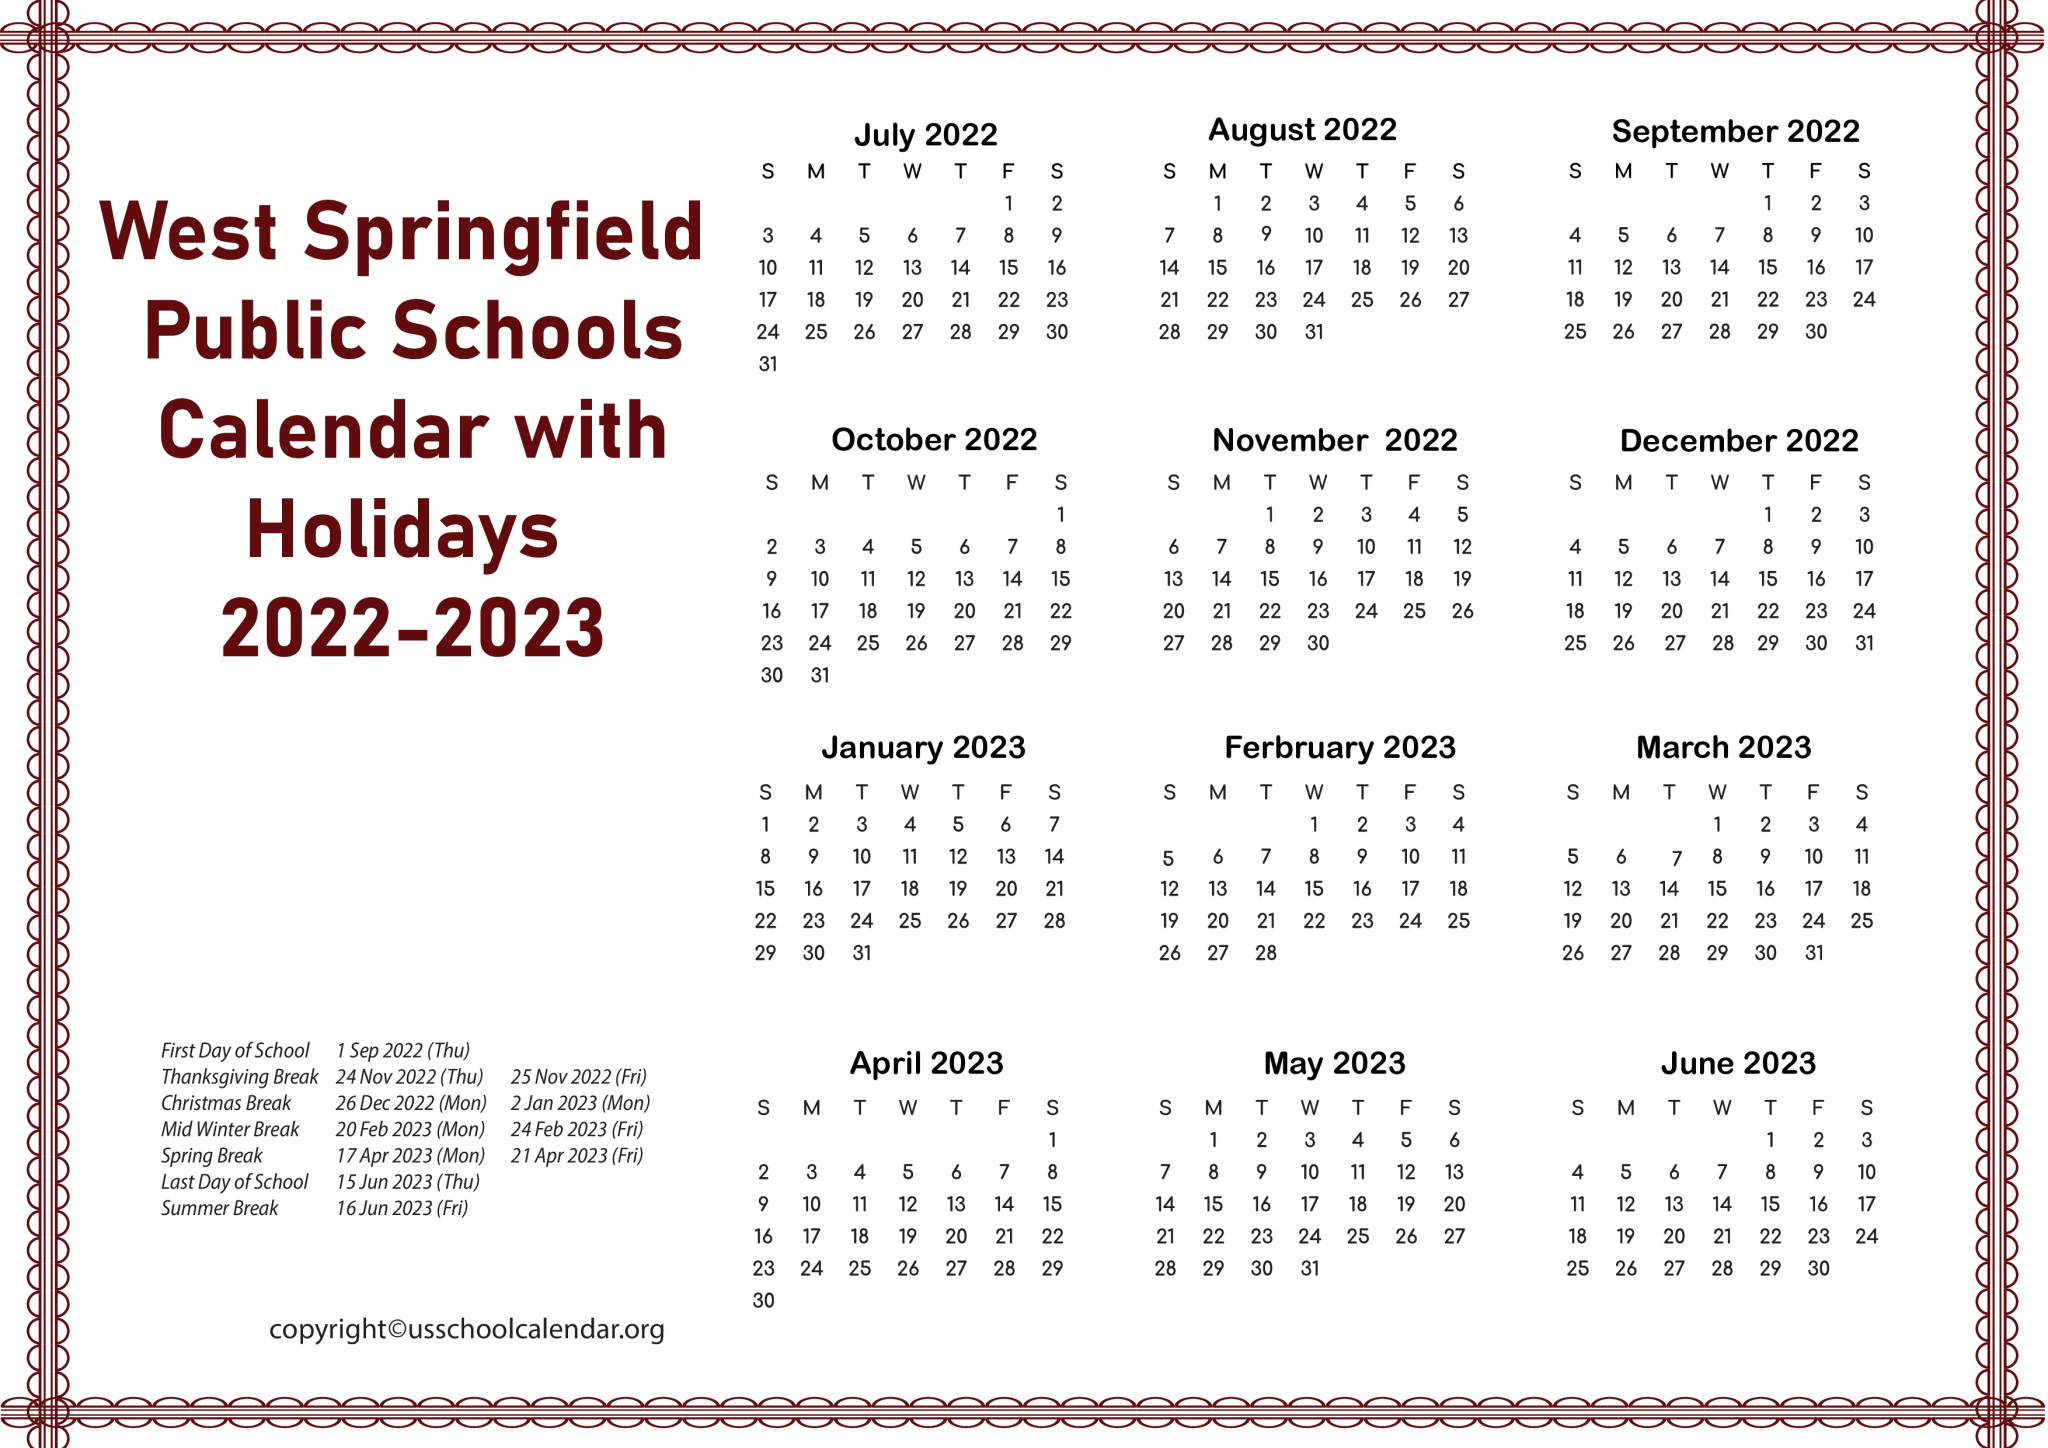 [WSPS] West Springfield Public Schools Calendar for 20222023